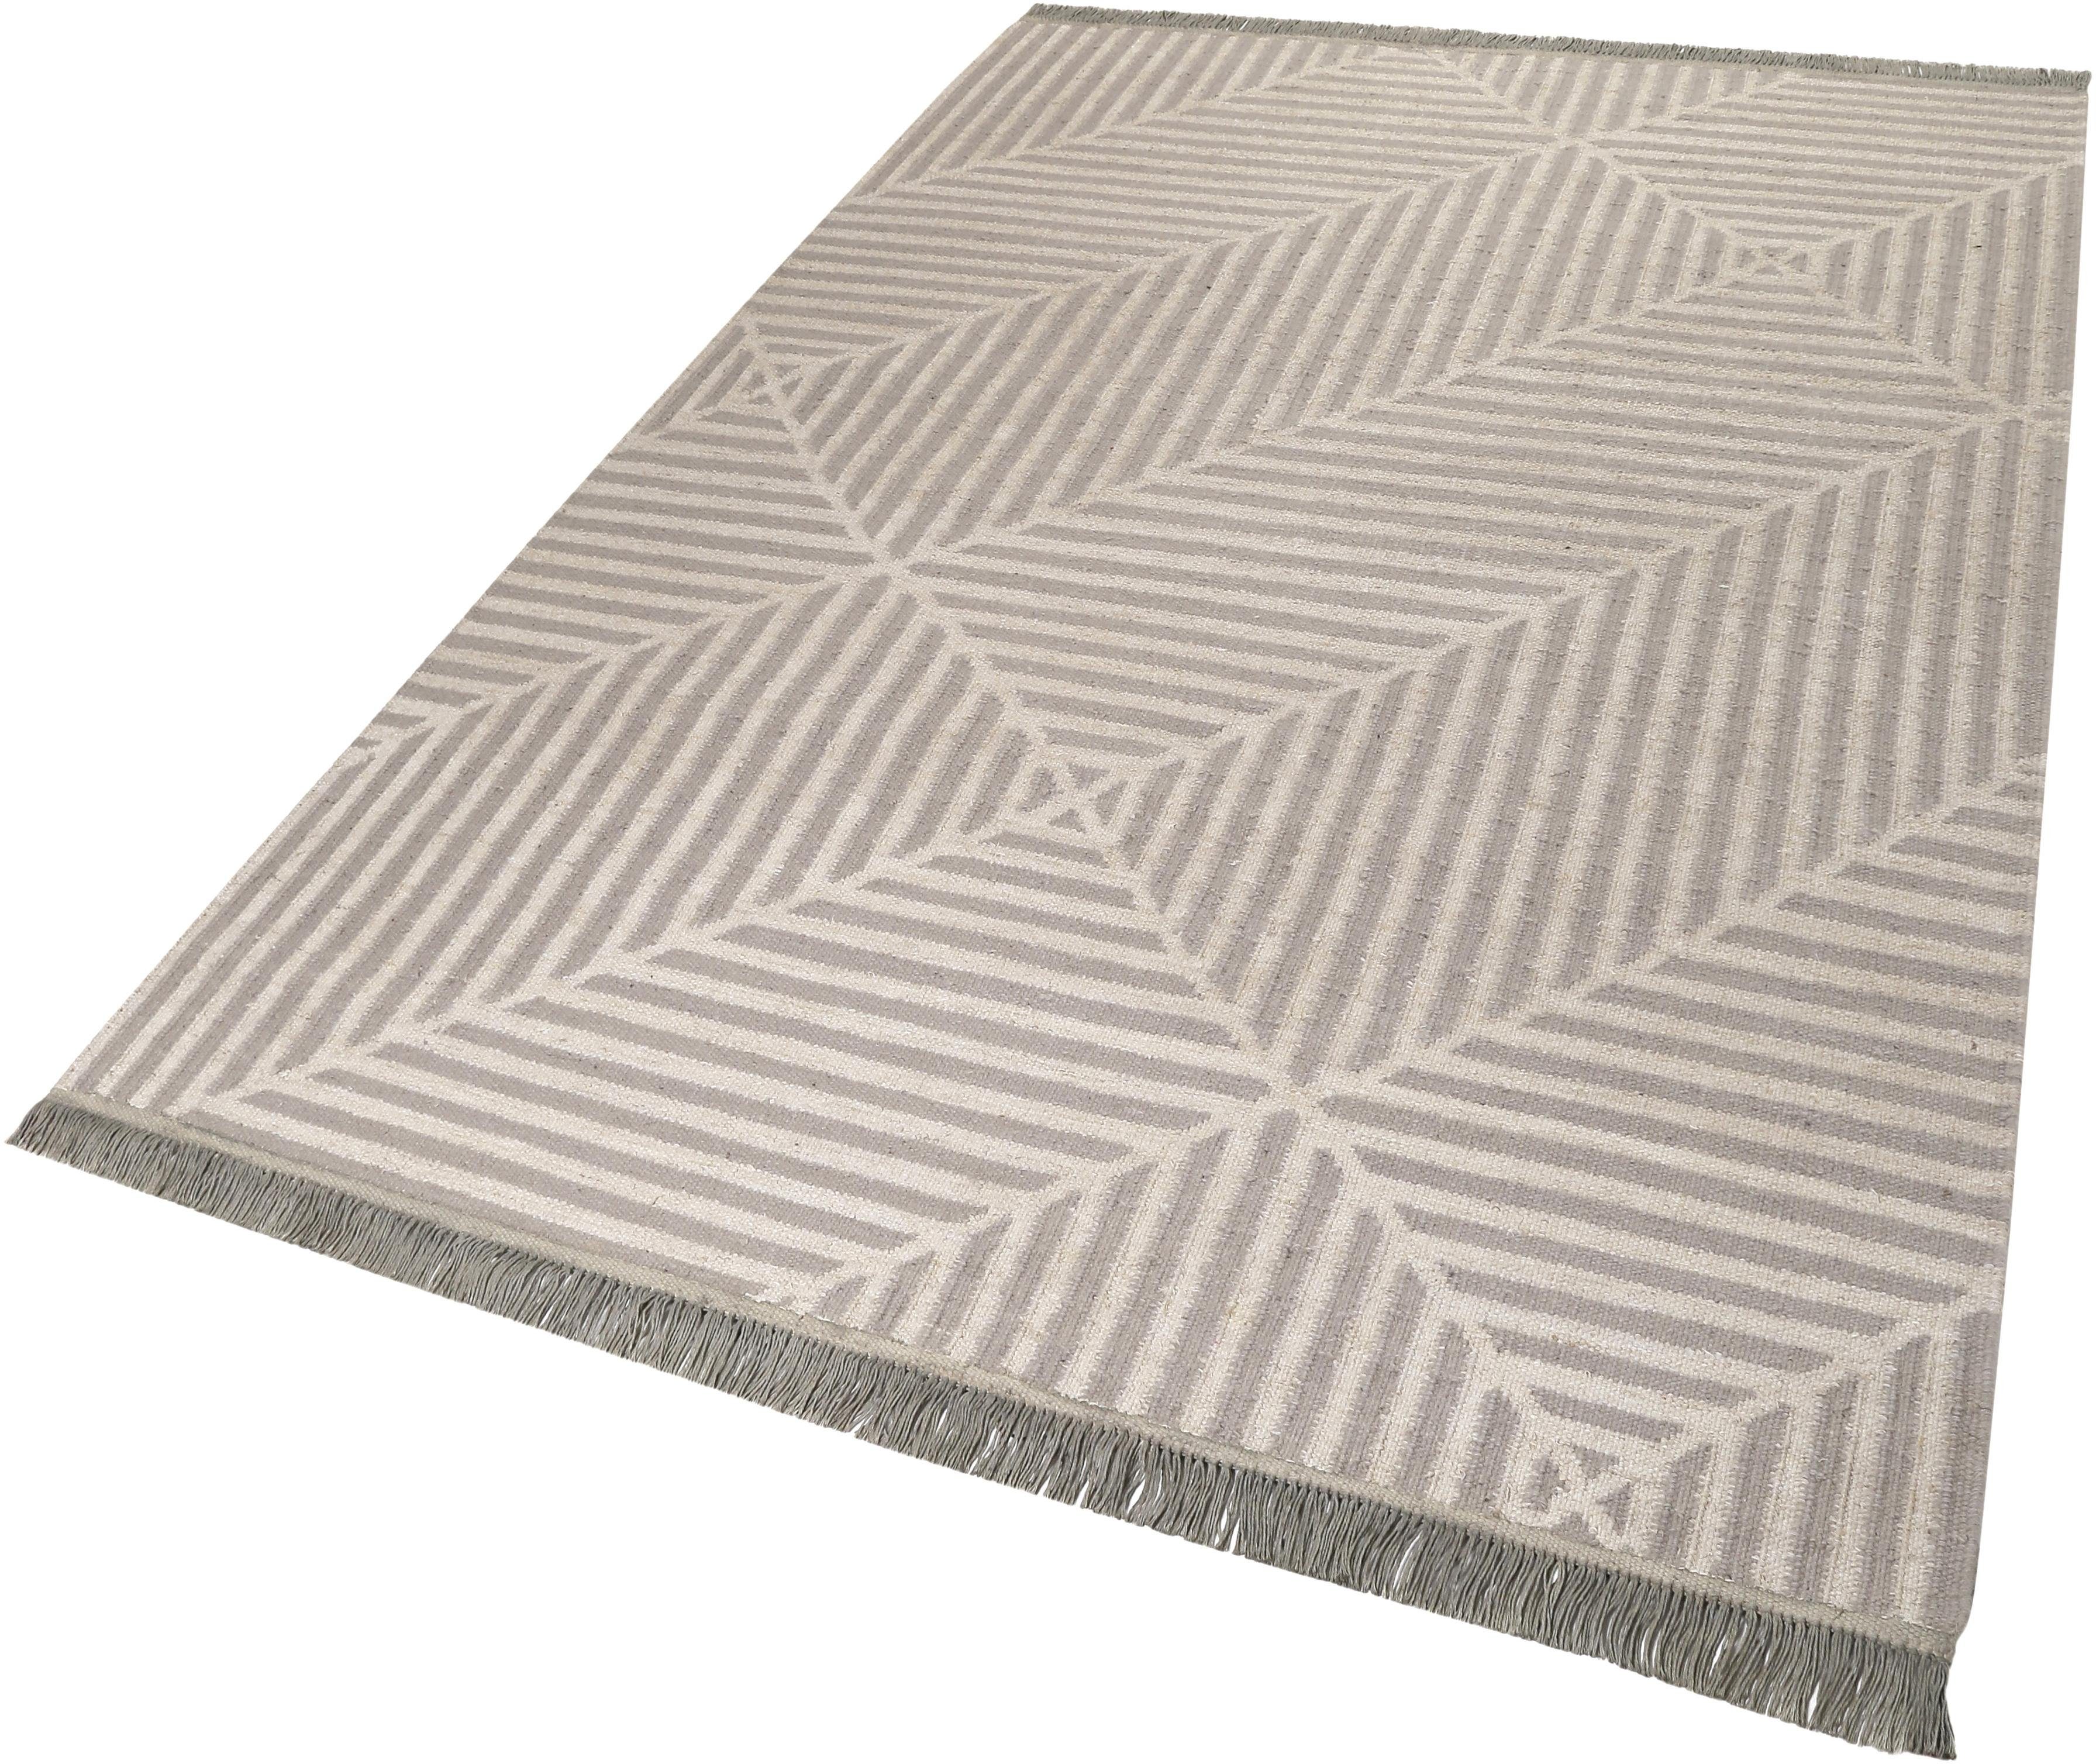 Carpets&co Vloerkleed, Carpets&co., Irregular Fields, hoogte: 5 mm, met de hand geweven